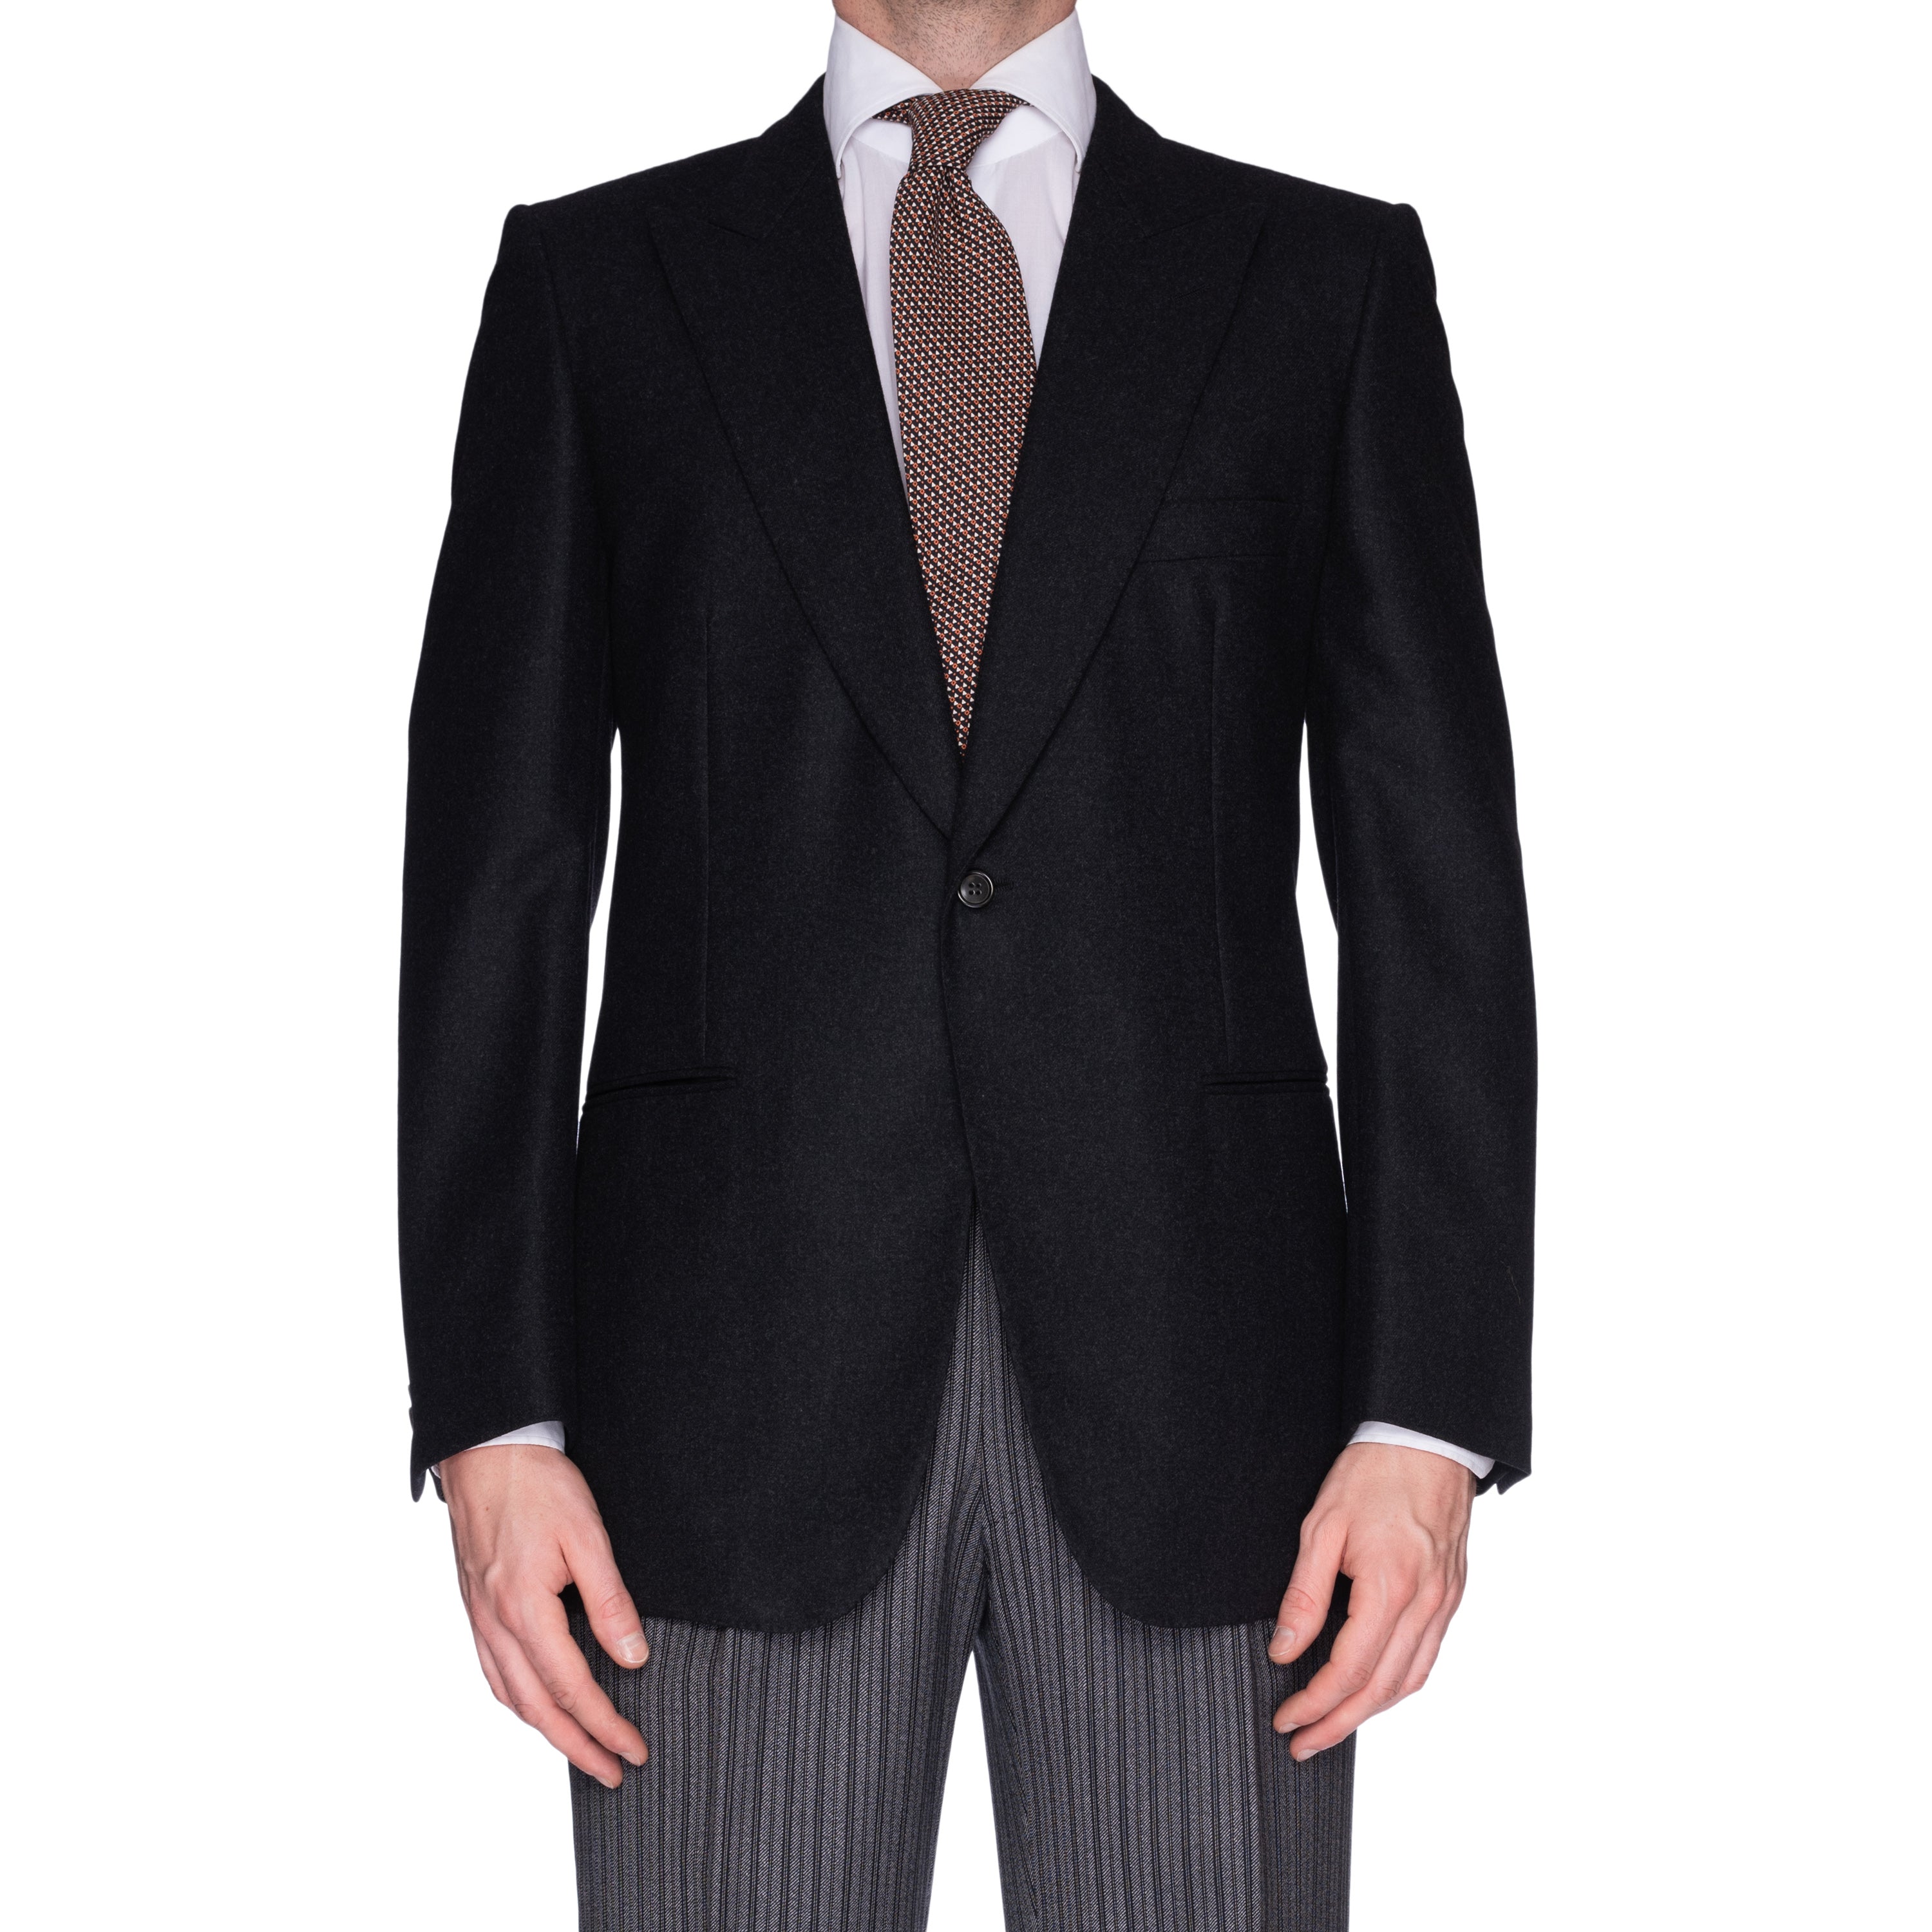 SARTORIA CASTANGIA Gray Merino Wool 1 Button Morning Wedding Suit EU 52 NEW US 42 CASTANGIA